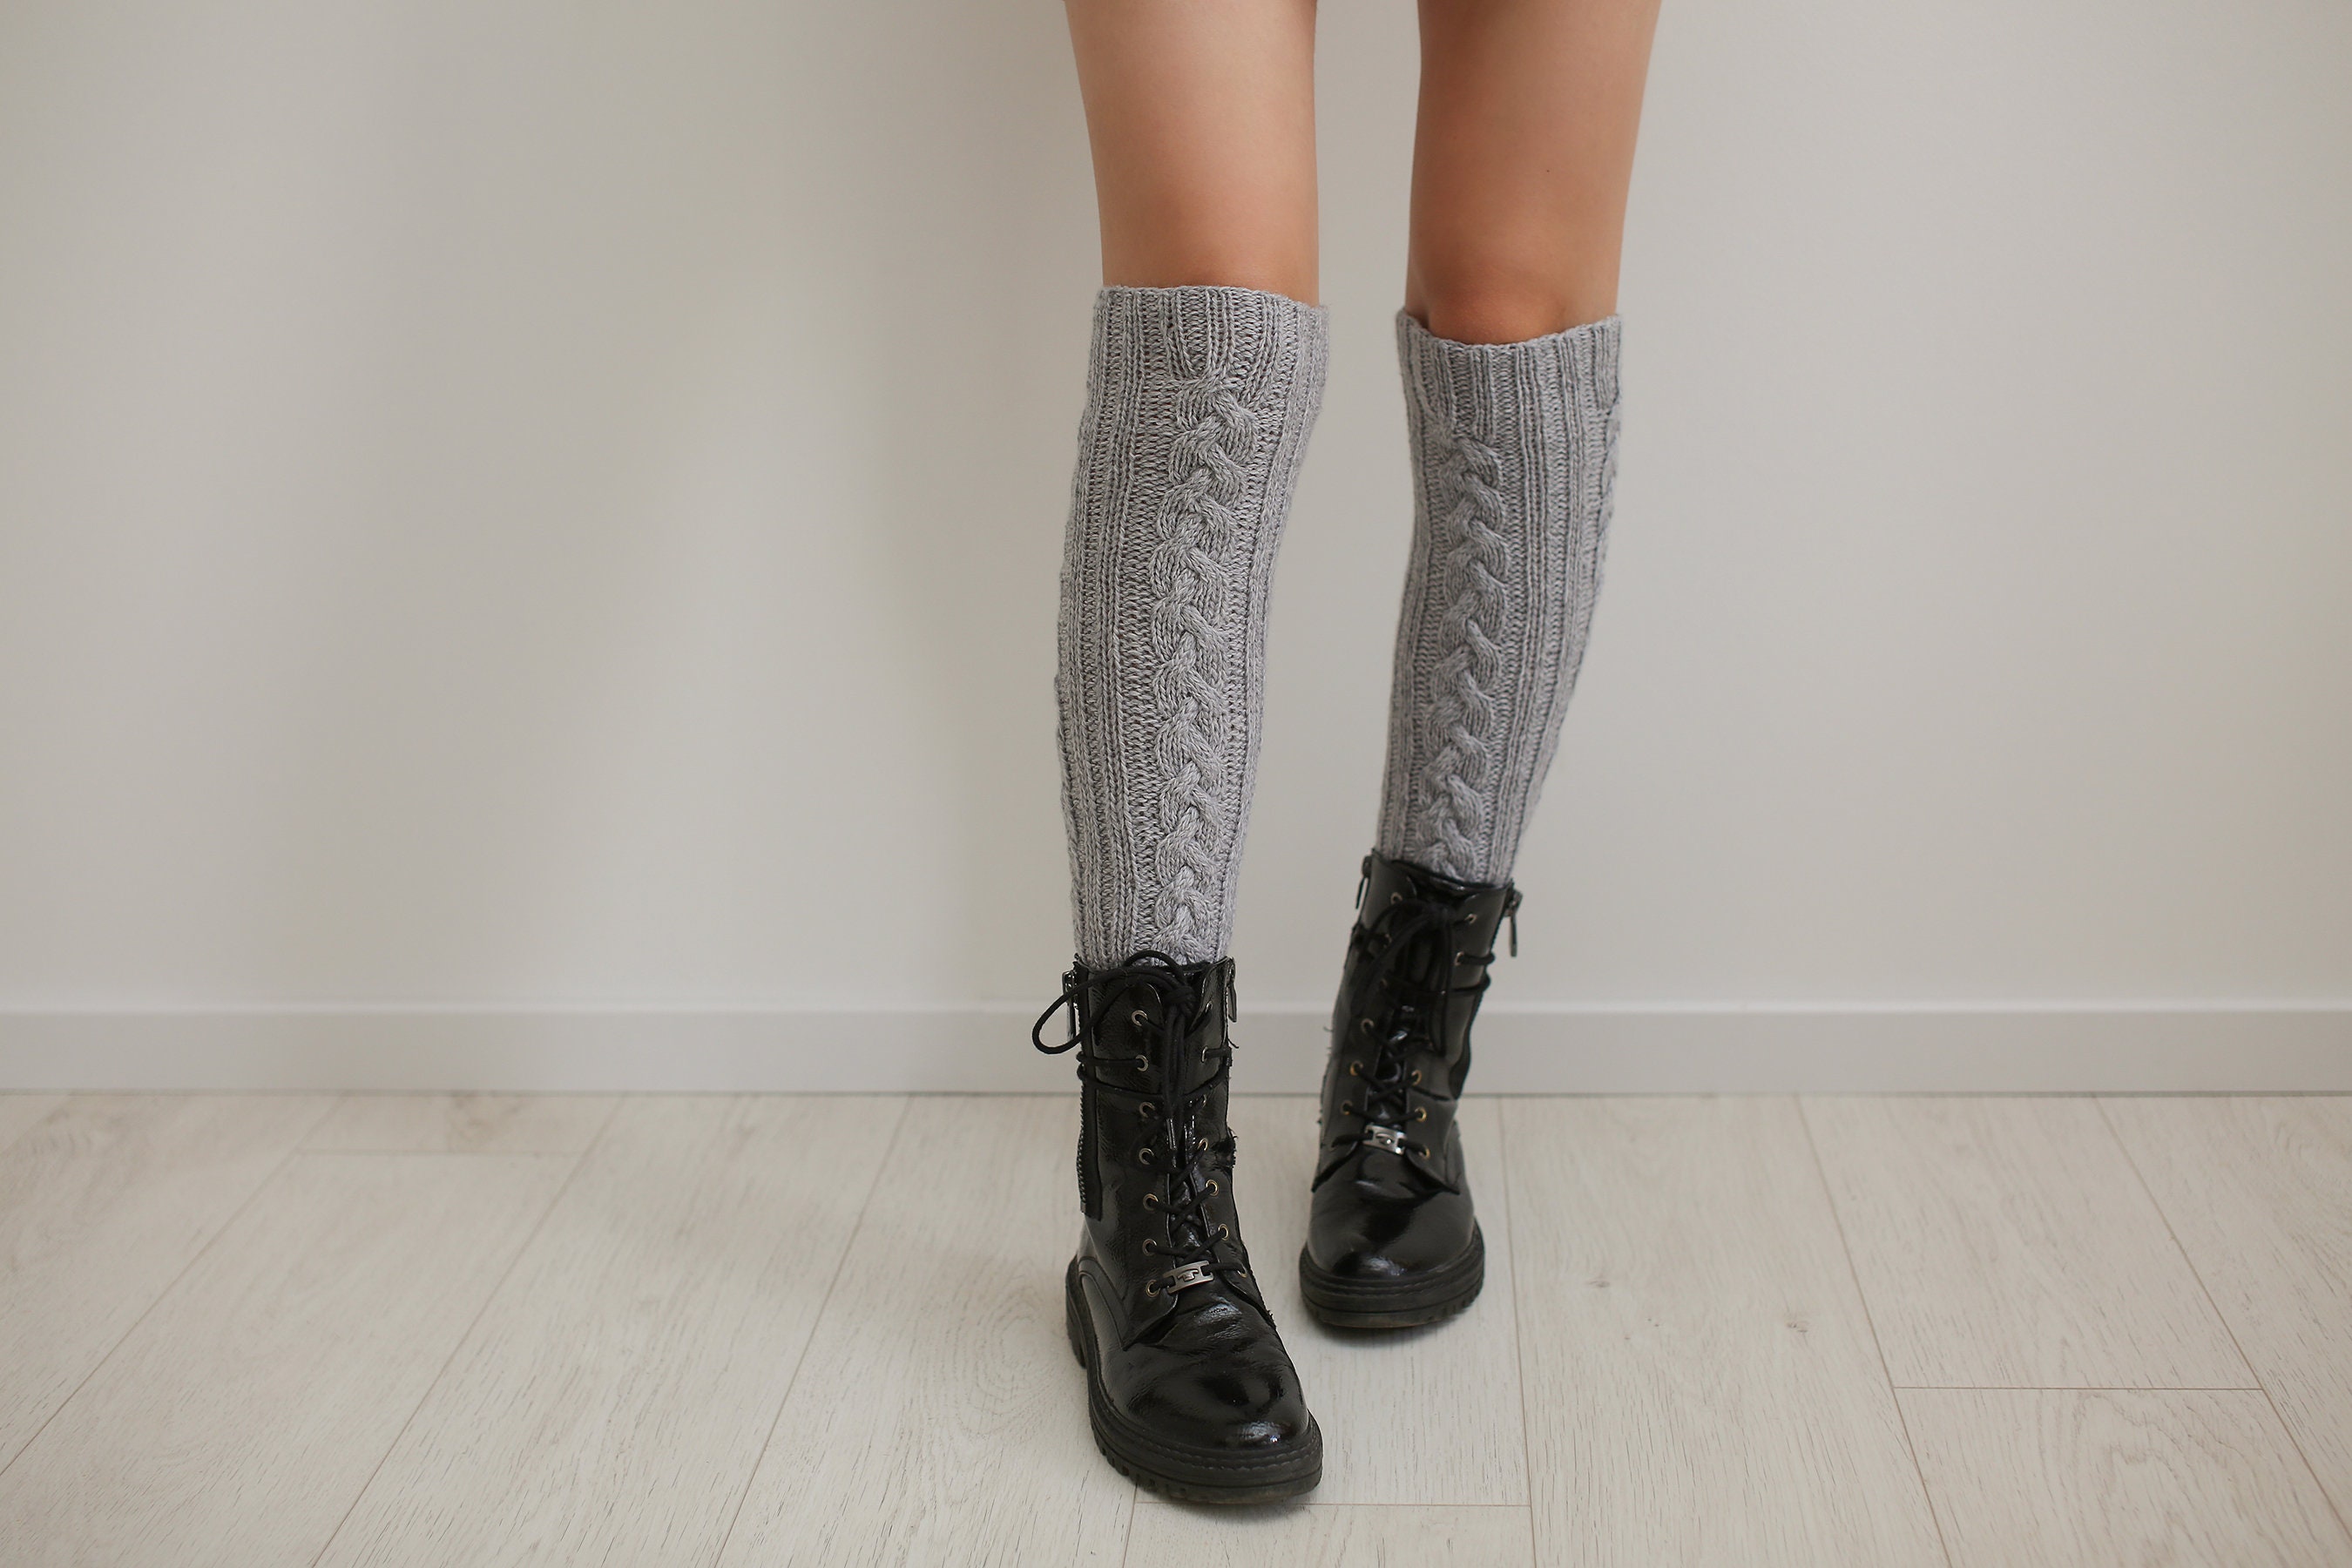 Warm and Comfortable Toeless Socks for Yoga or Dancing Classes, Merino Wool  Hand Knitted Leg Warmers, Natural Wool Toeless Knee Long Socks 